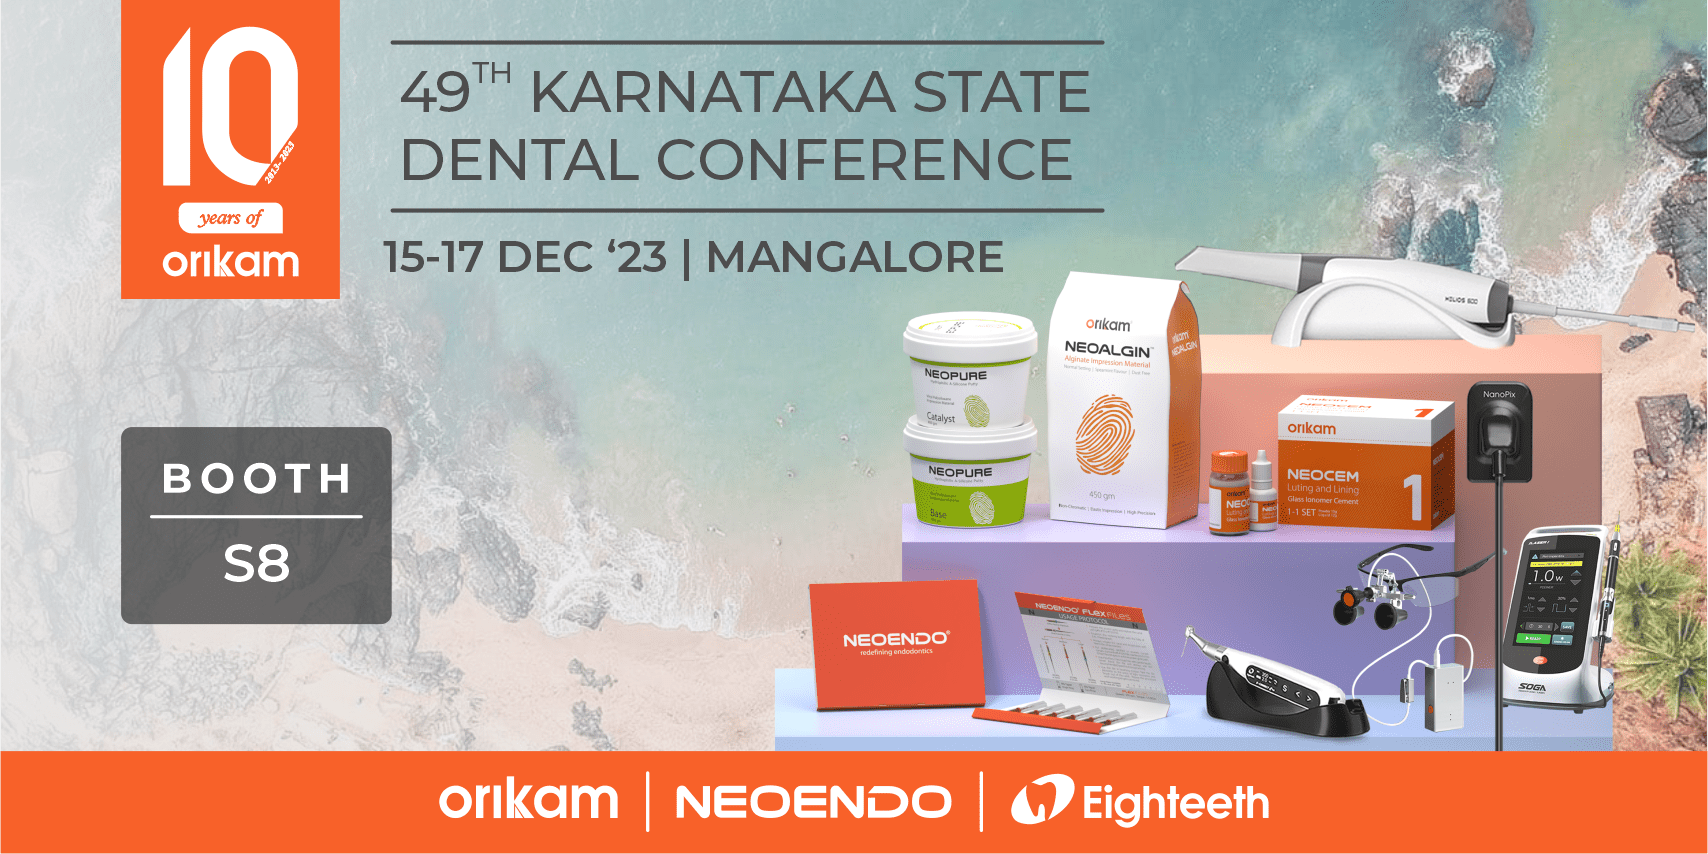 49th Karnataka State Dental Conference" in Mangalore